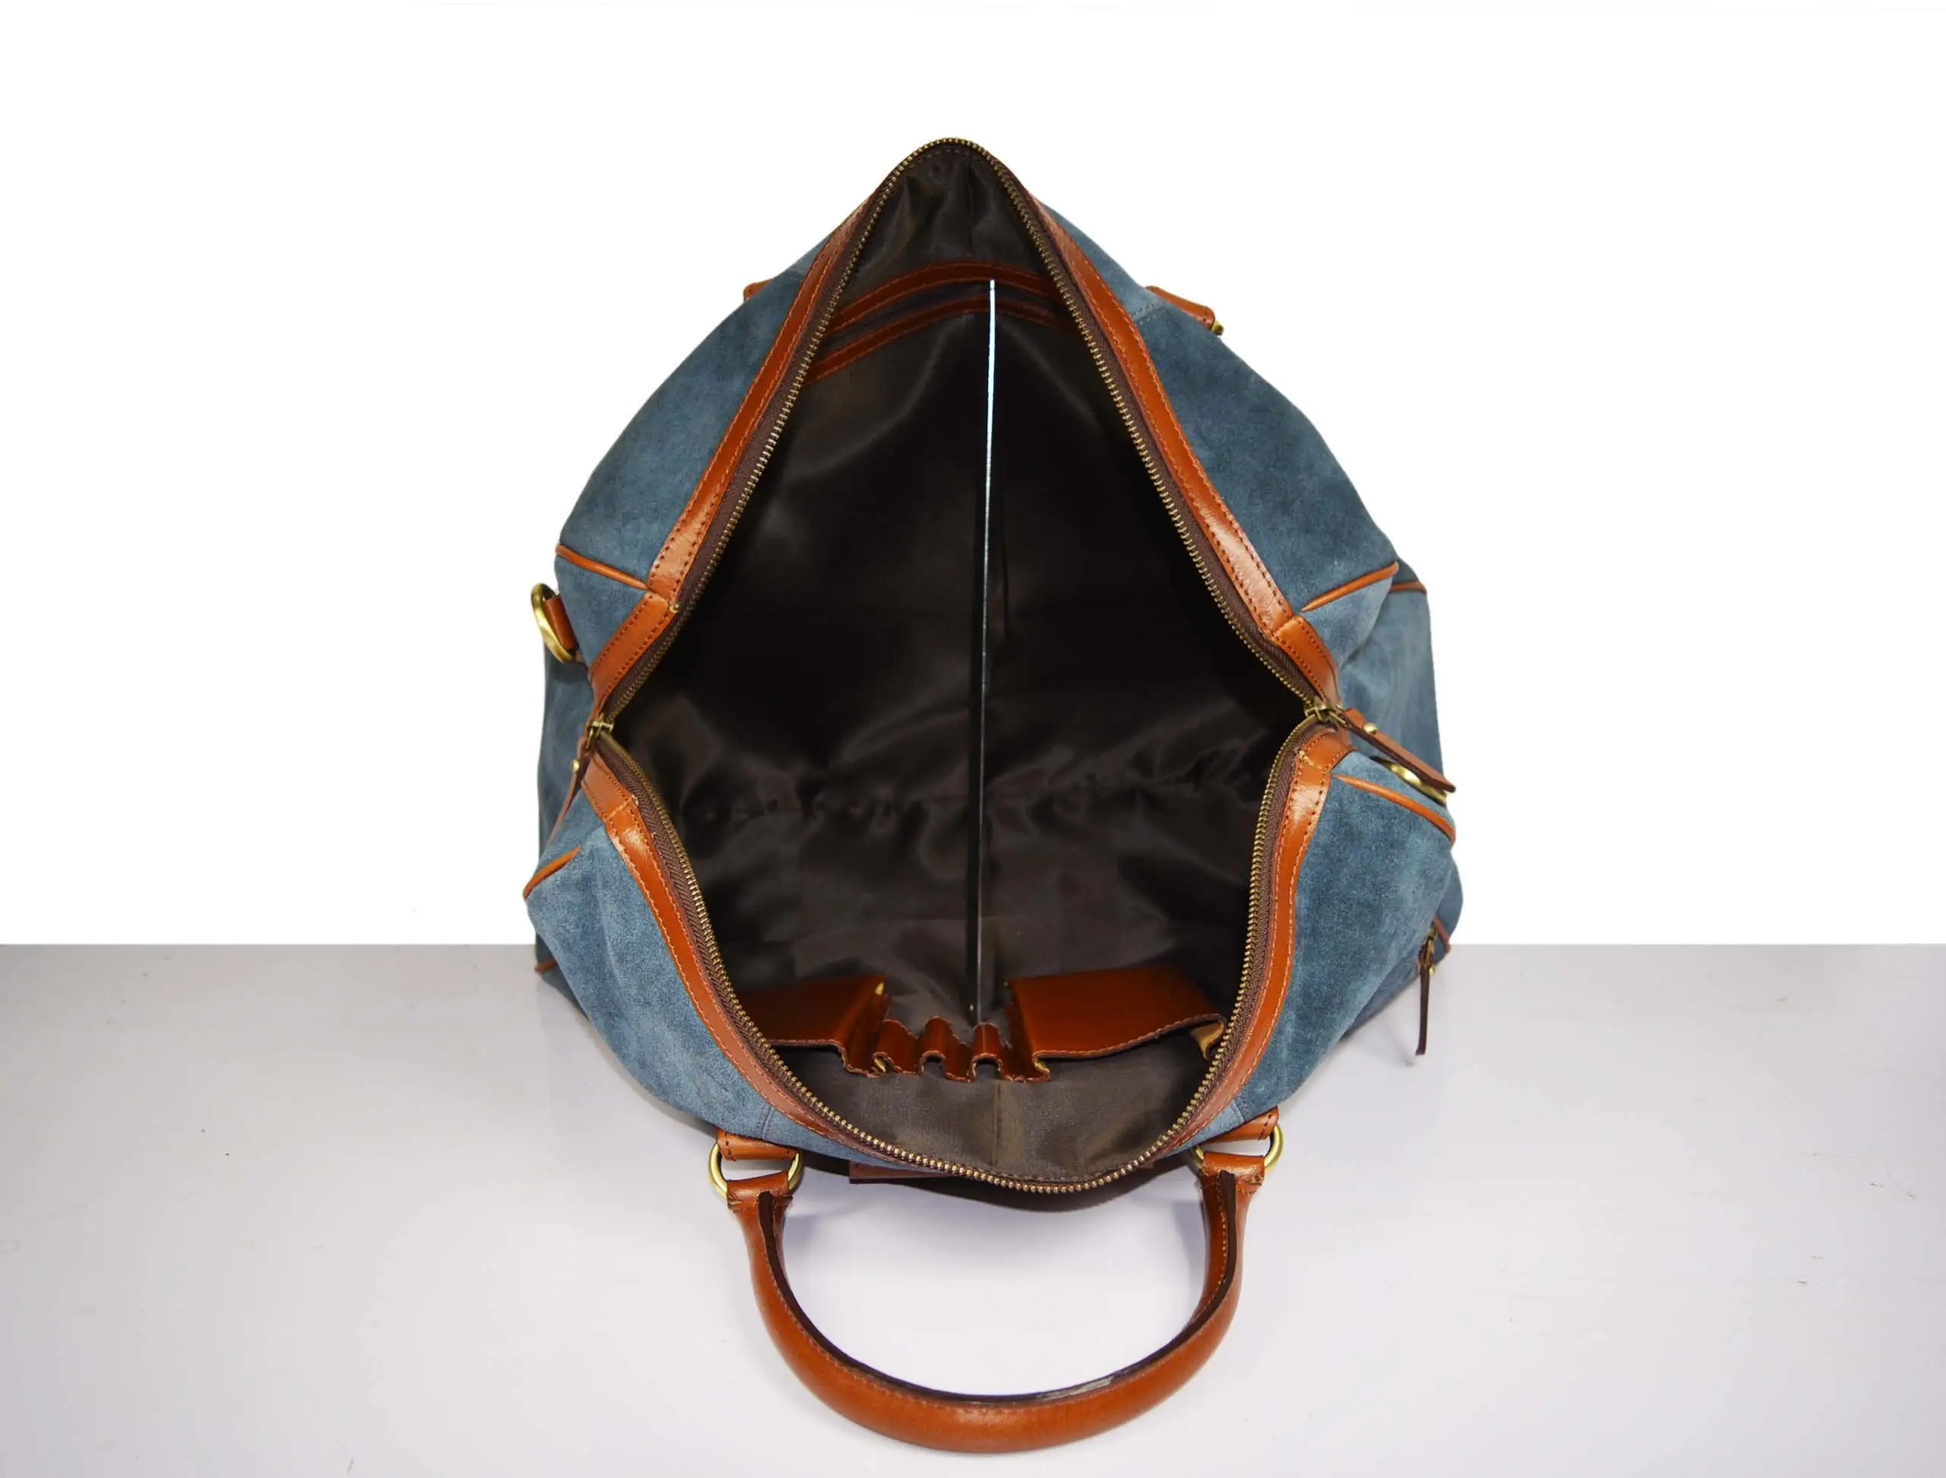 Canvas Weekender Bag over Night Travel - Blueish grey Open Top